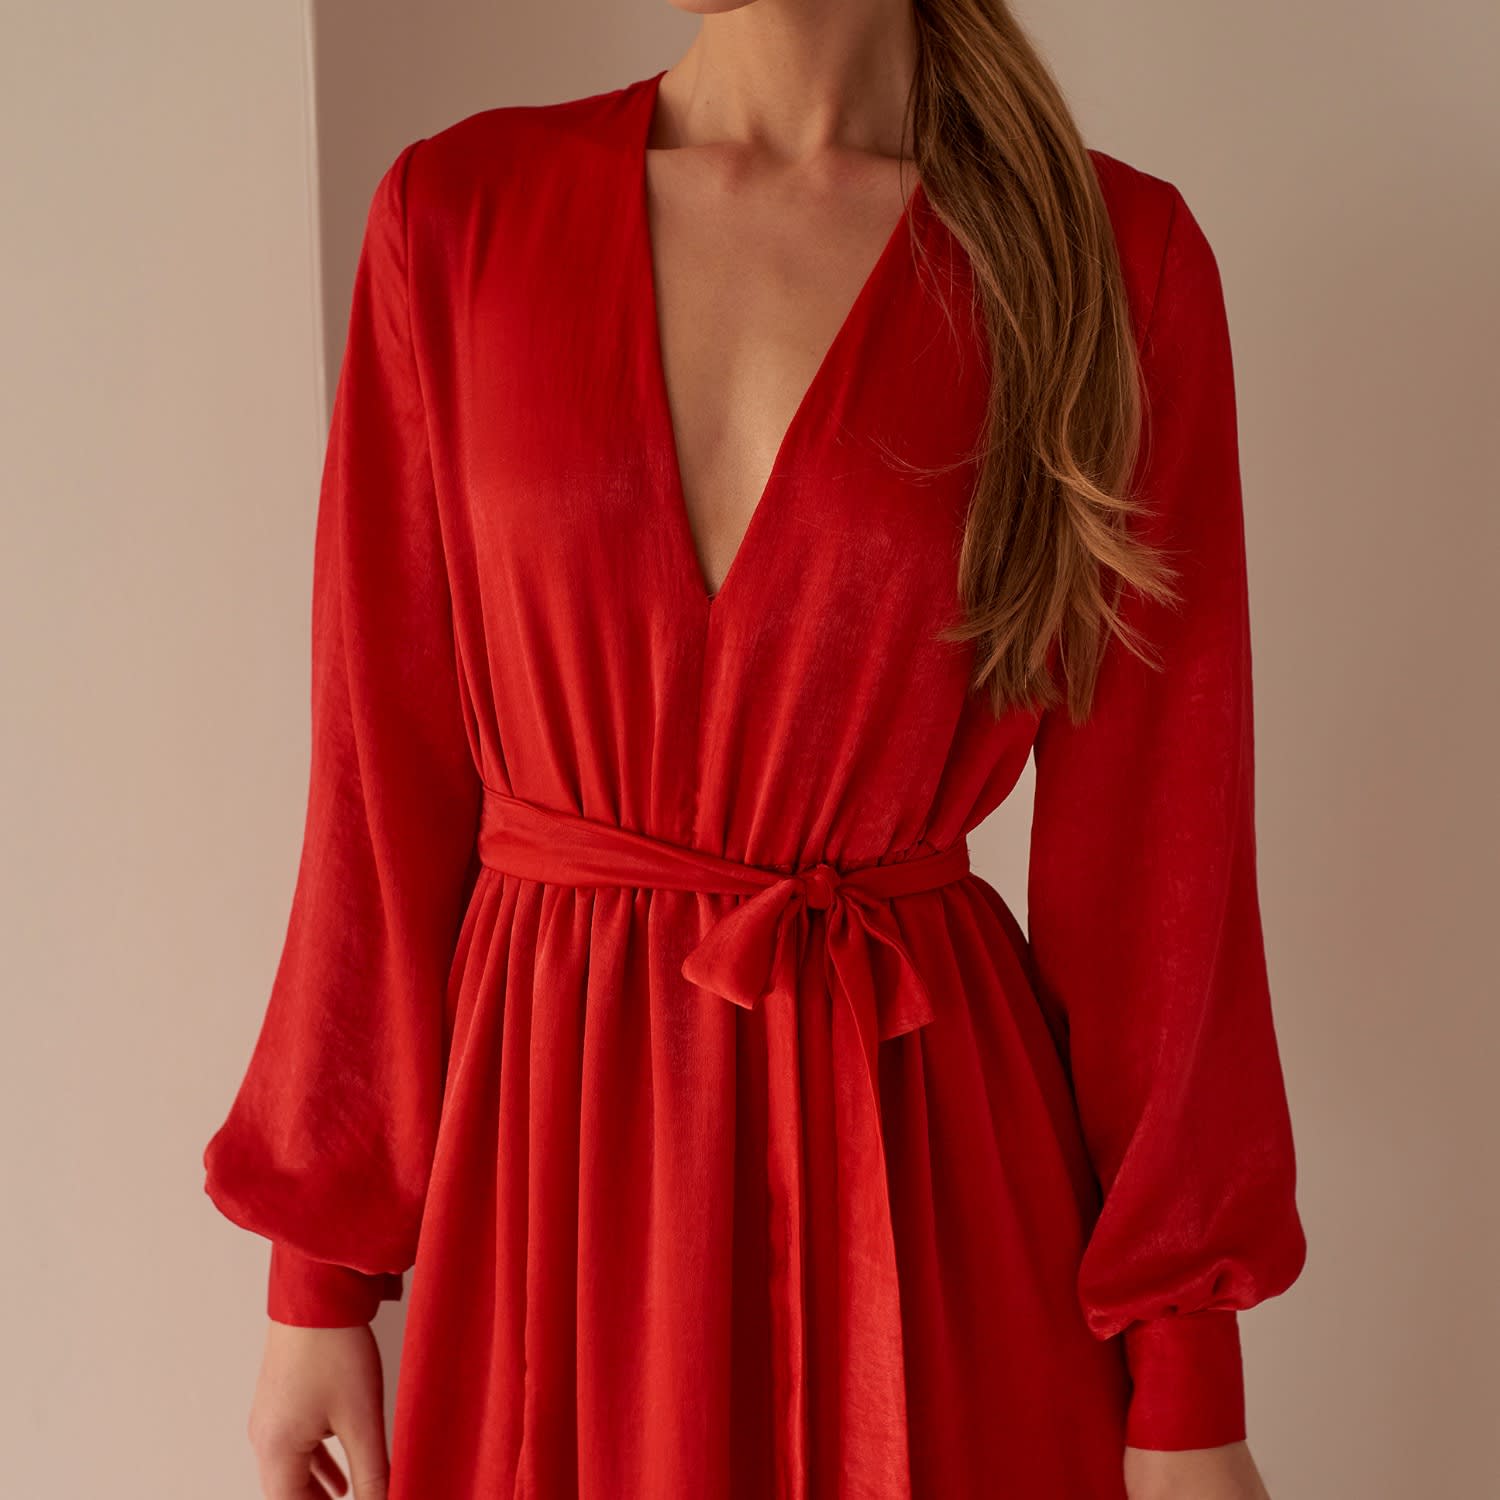 Women's Red Maxi Dress - V-neck - 3 Sizes from Apollo Box